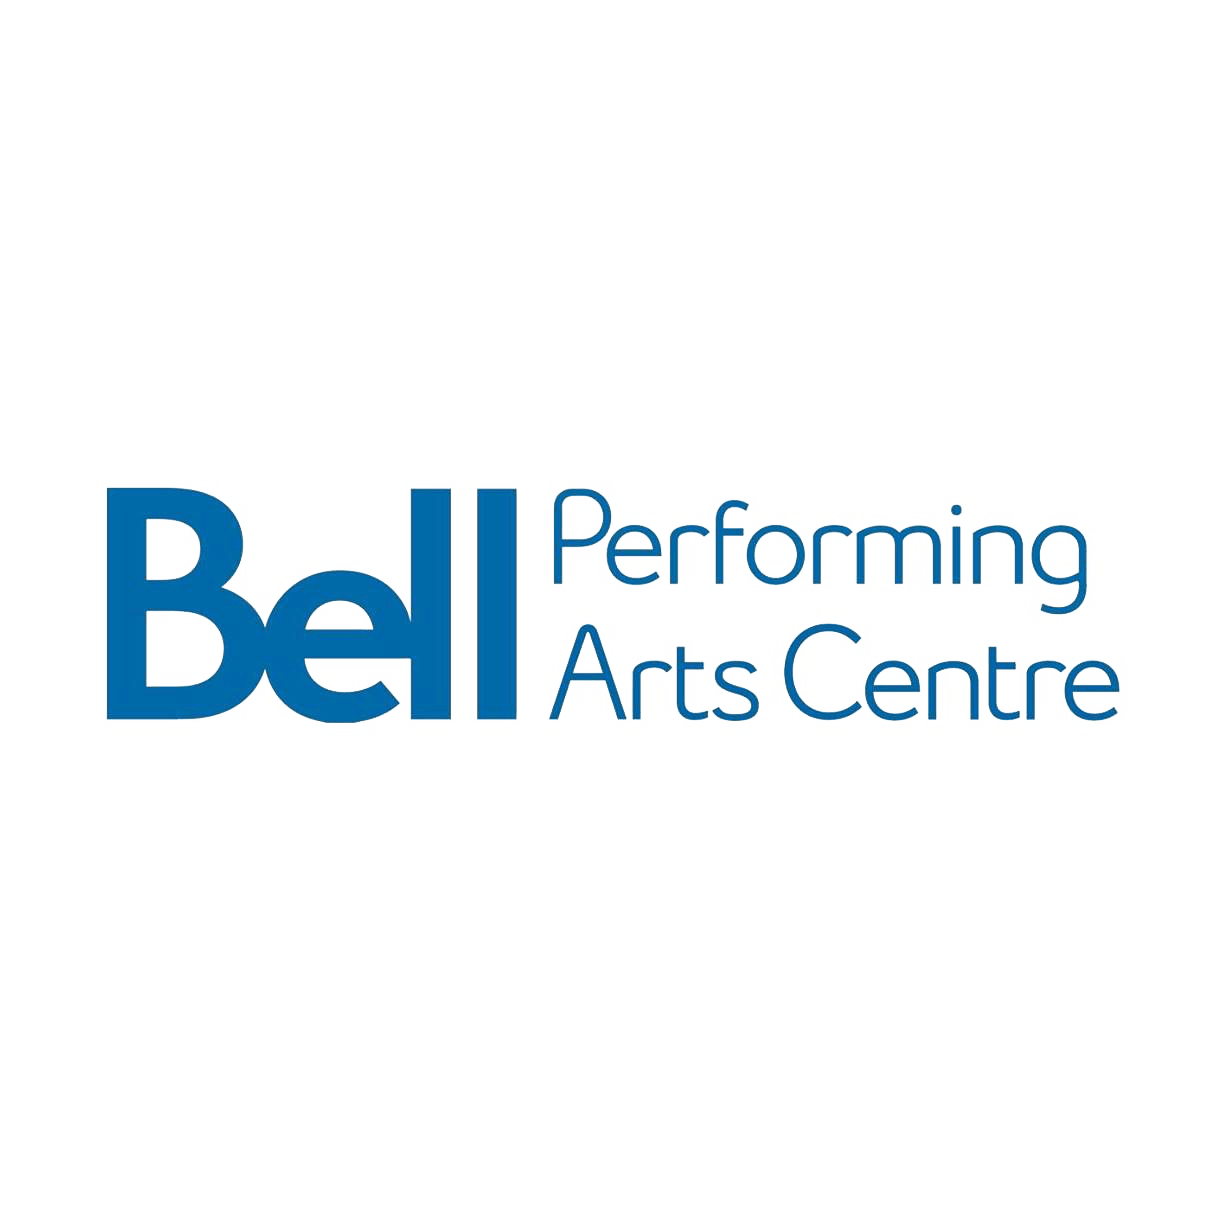 Bell Performing Arts Centre logo